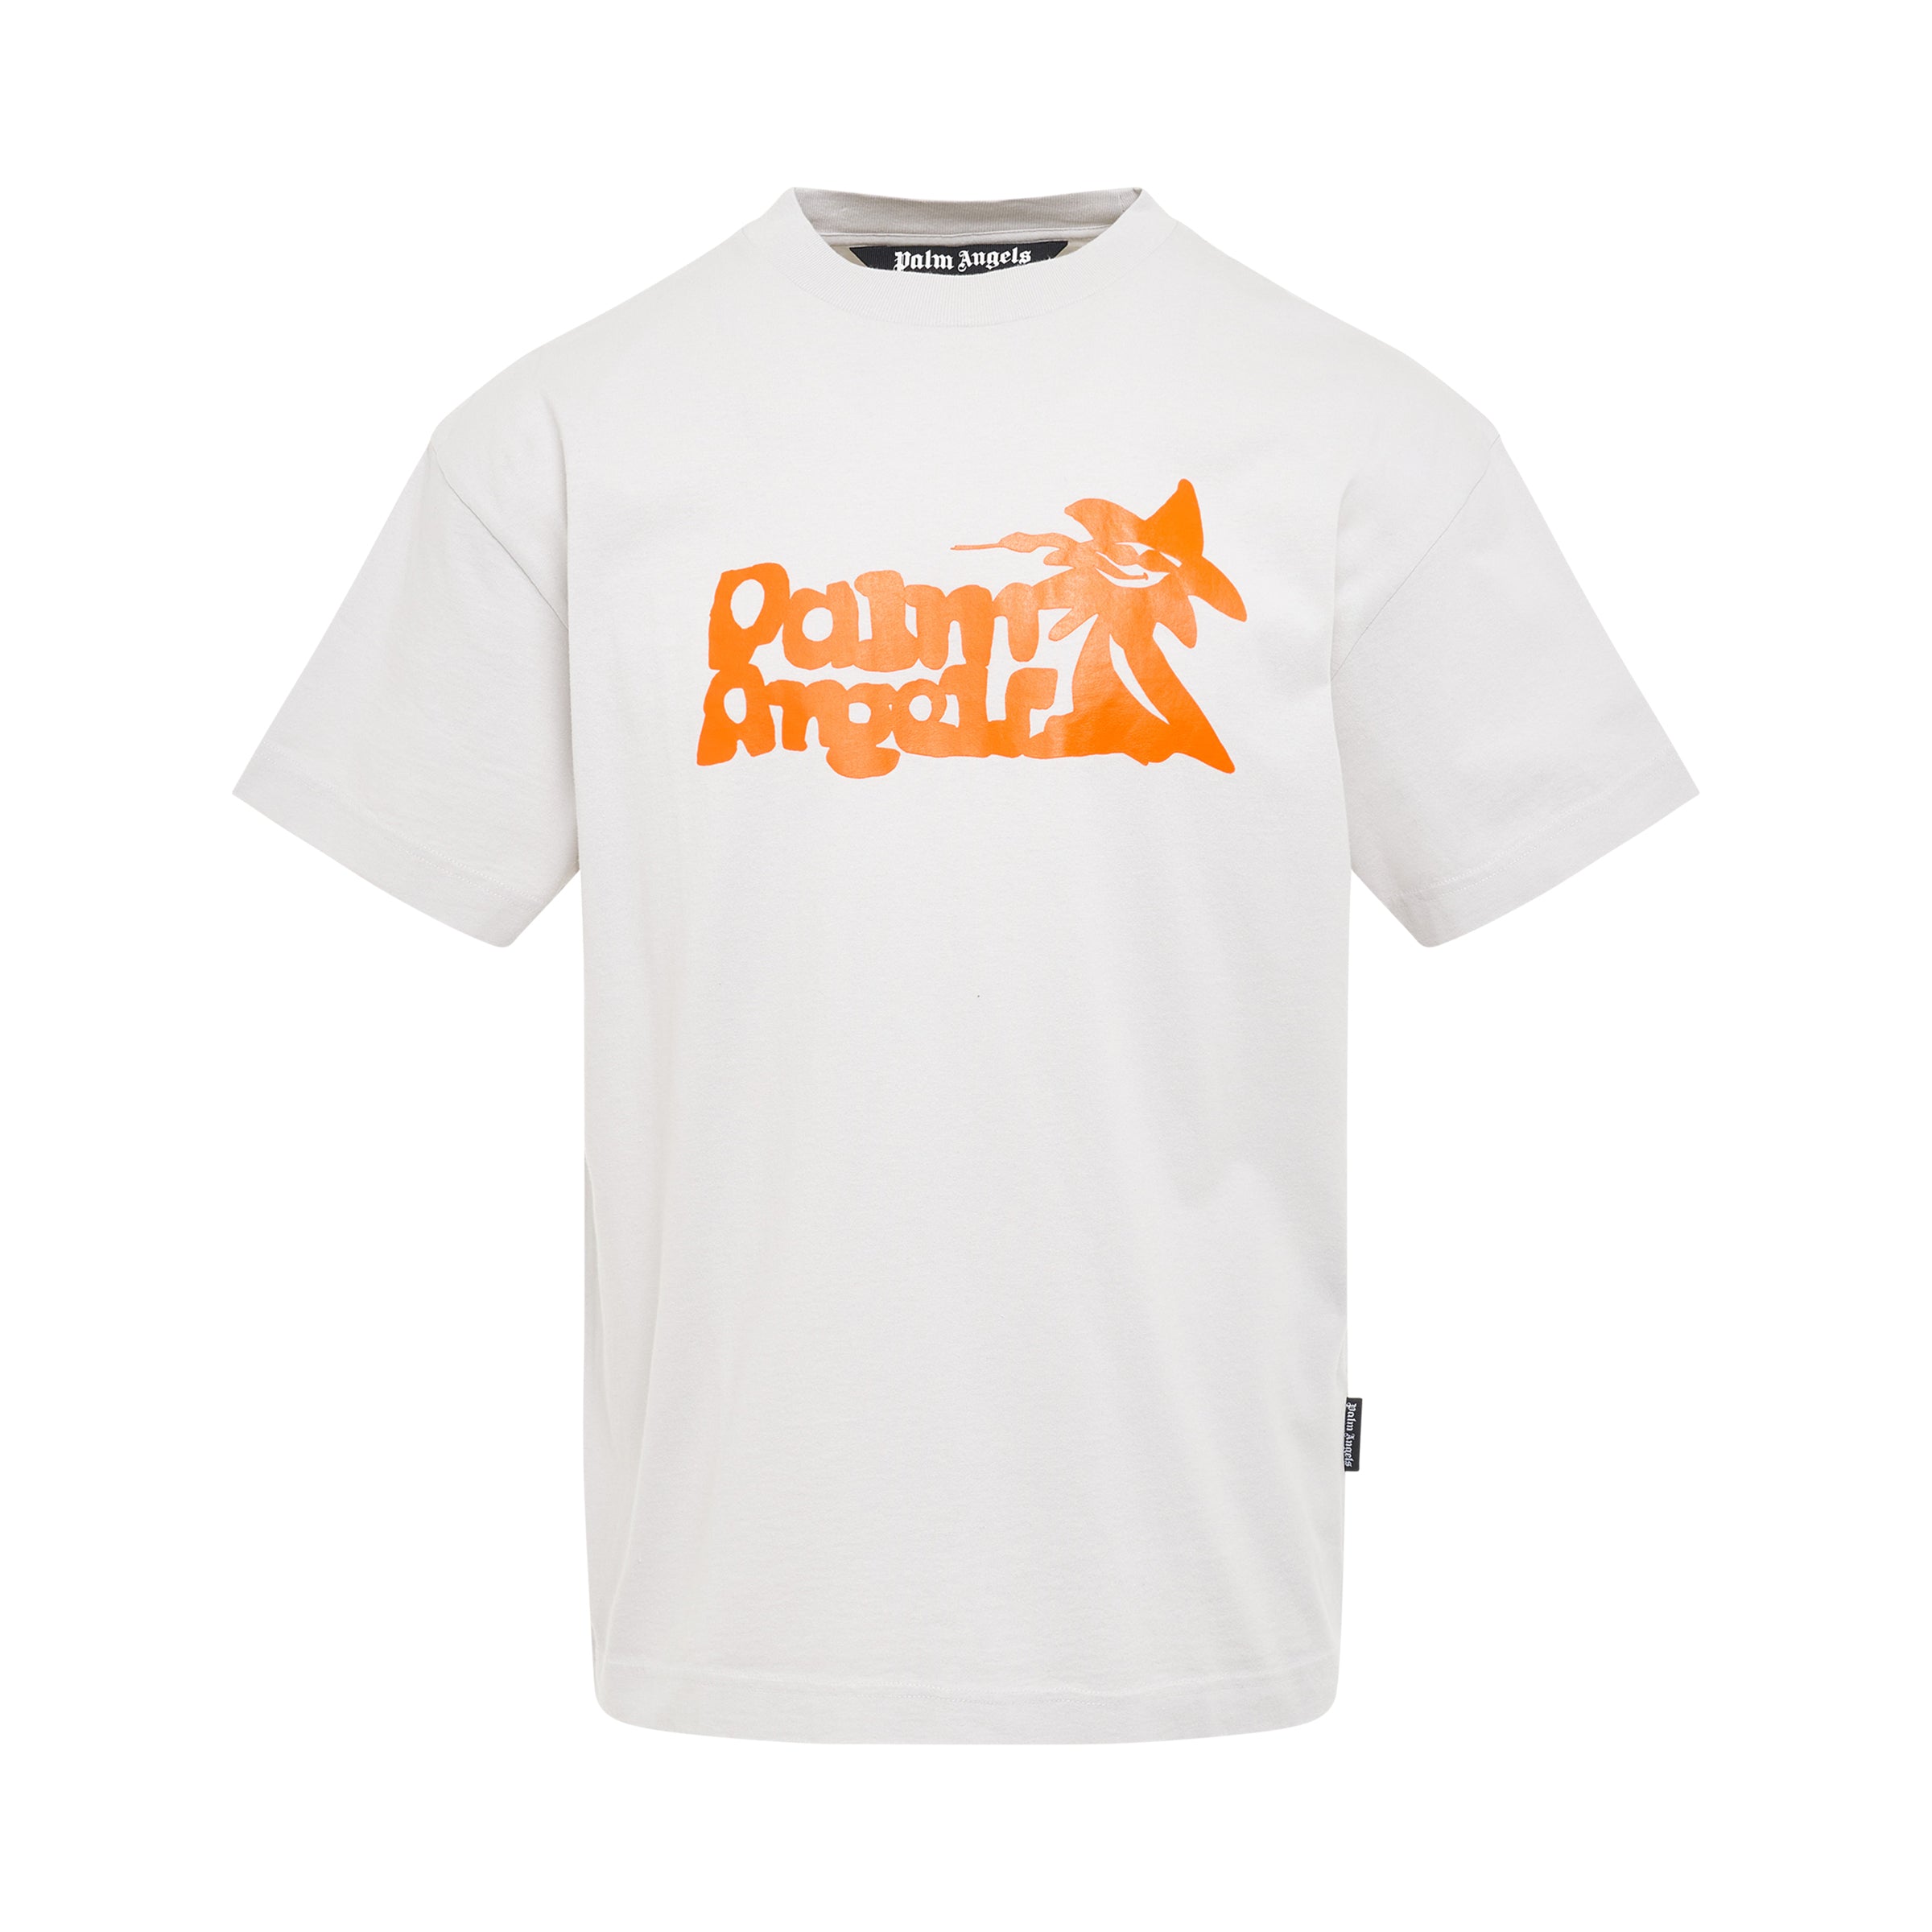 "Enzo" Logo Print T-Shirt in Light Grey/Orange